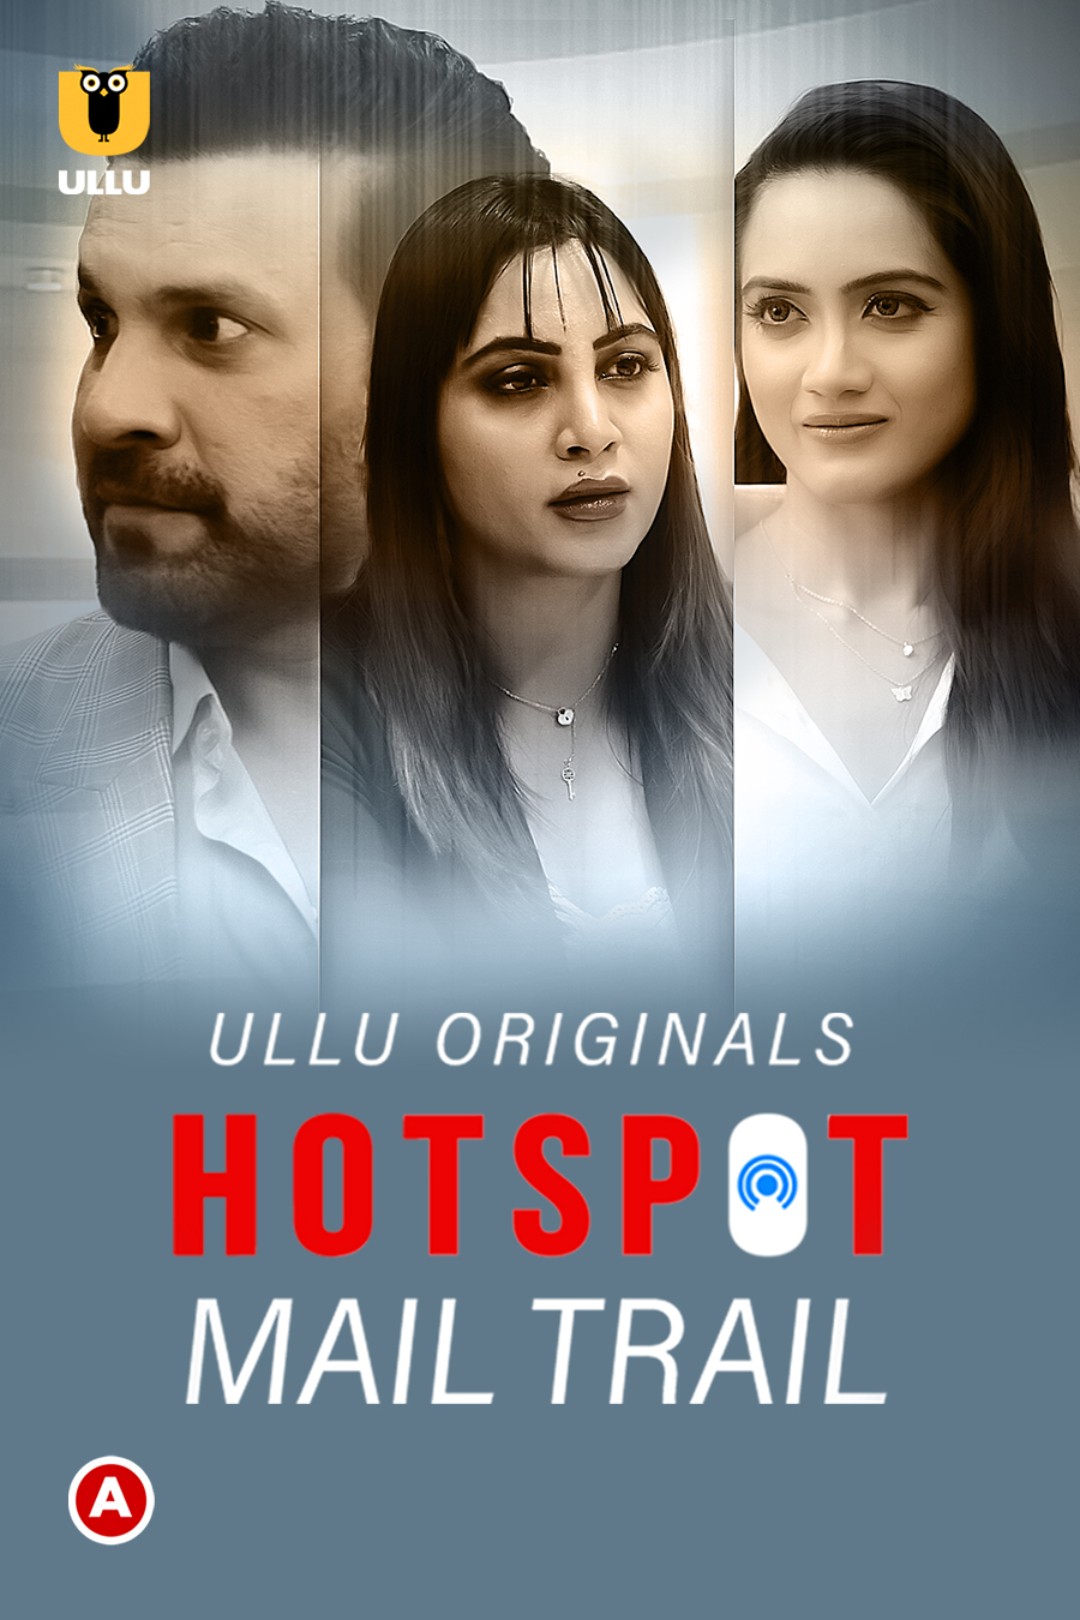 Download Mail Trail (Hotspot) 2022 S01 Hindi Ullu Originals Complete Web Series 720p HDRip 300MB